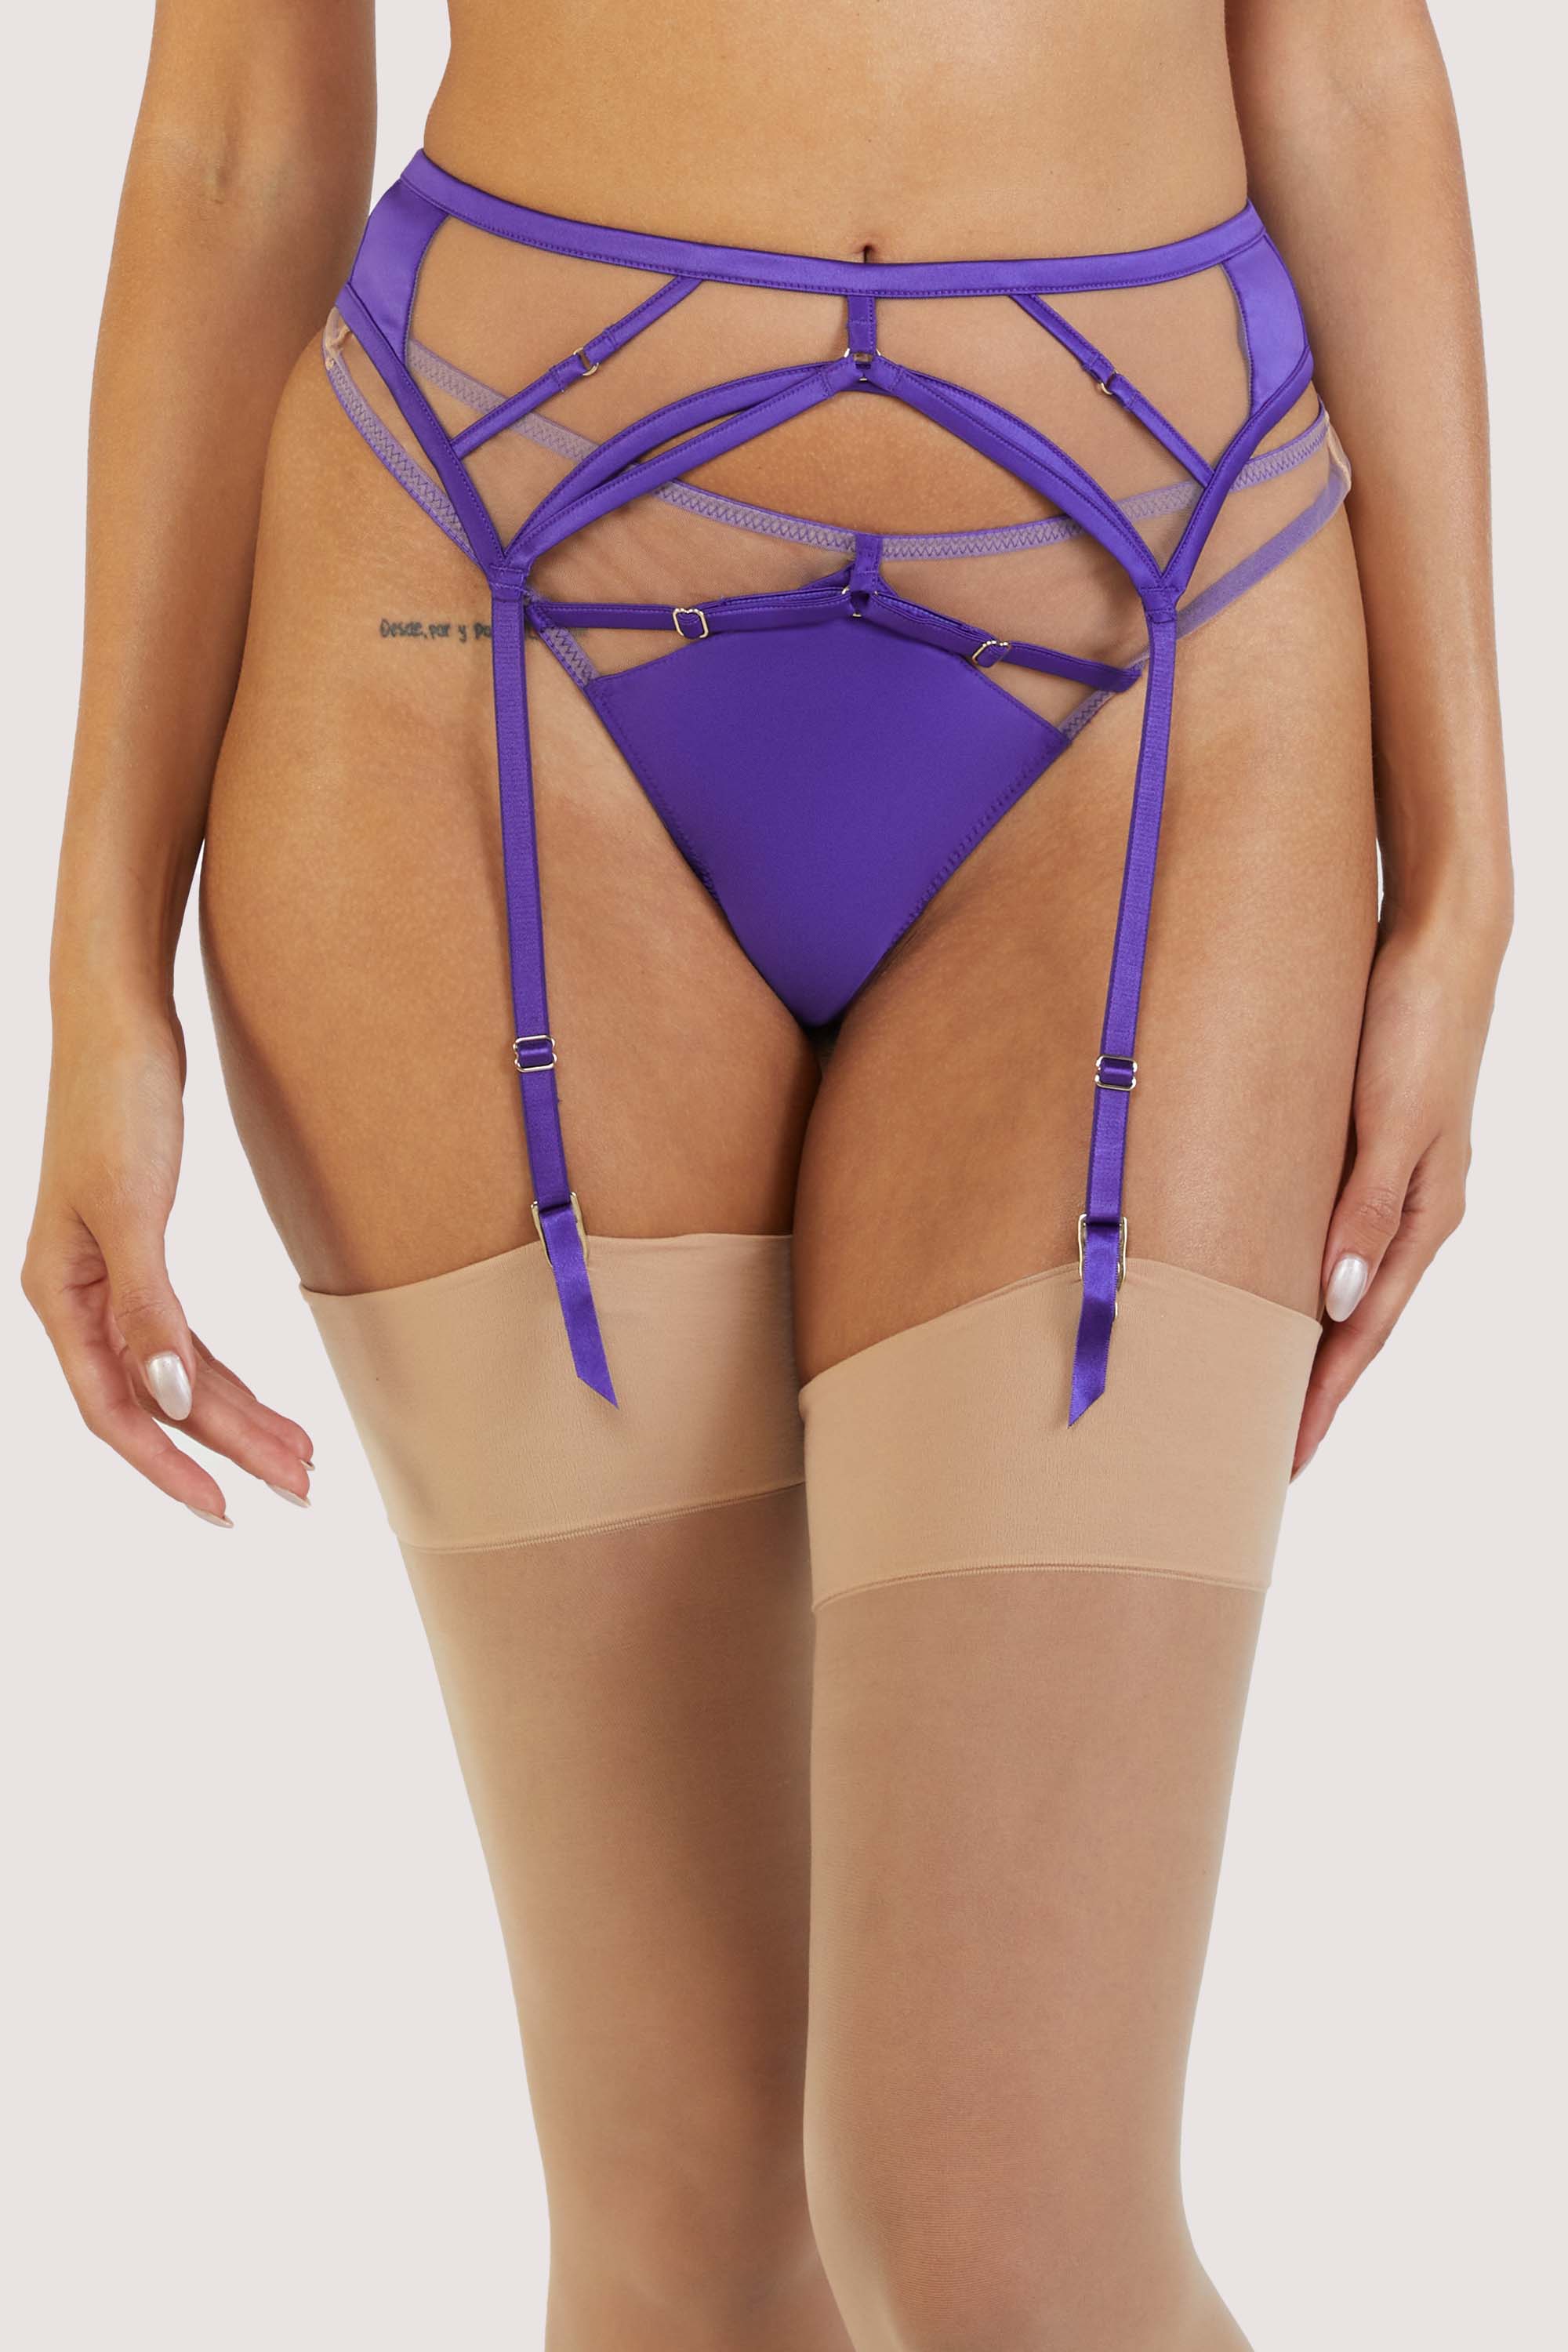 Ramona Purple Strap Detail Illusion Mesh Suspender 16